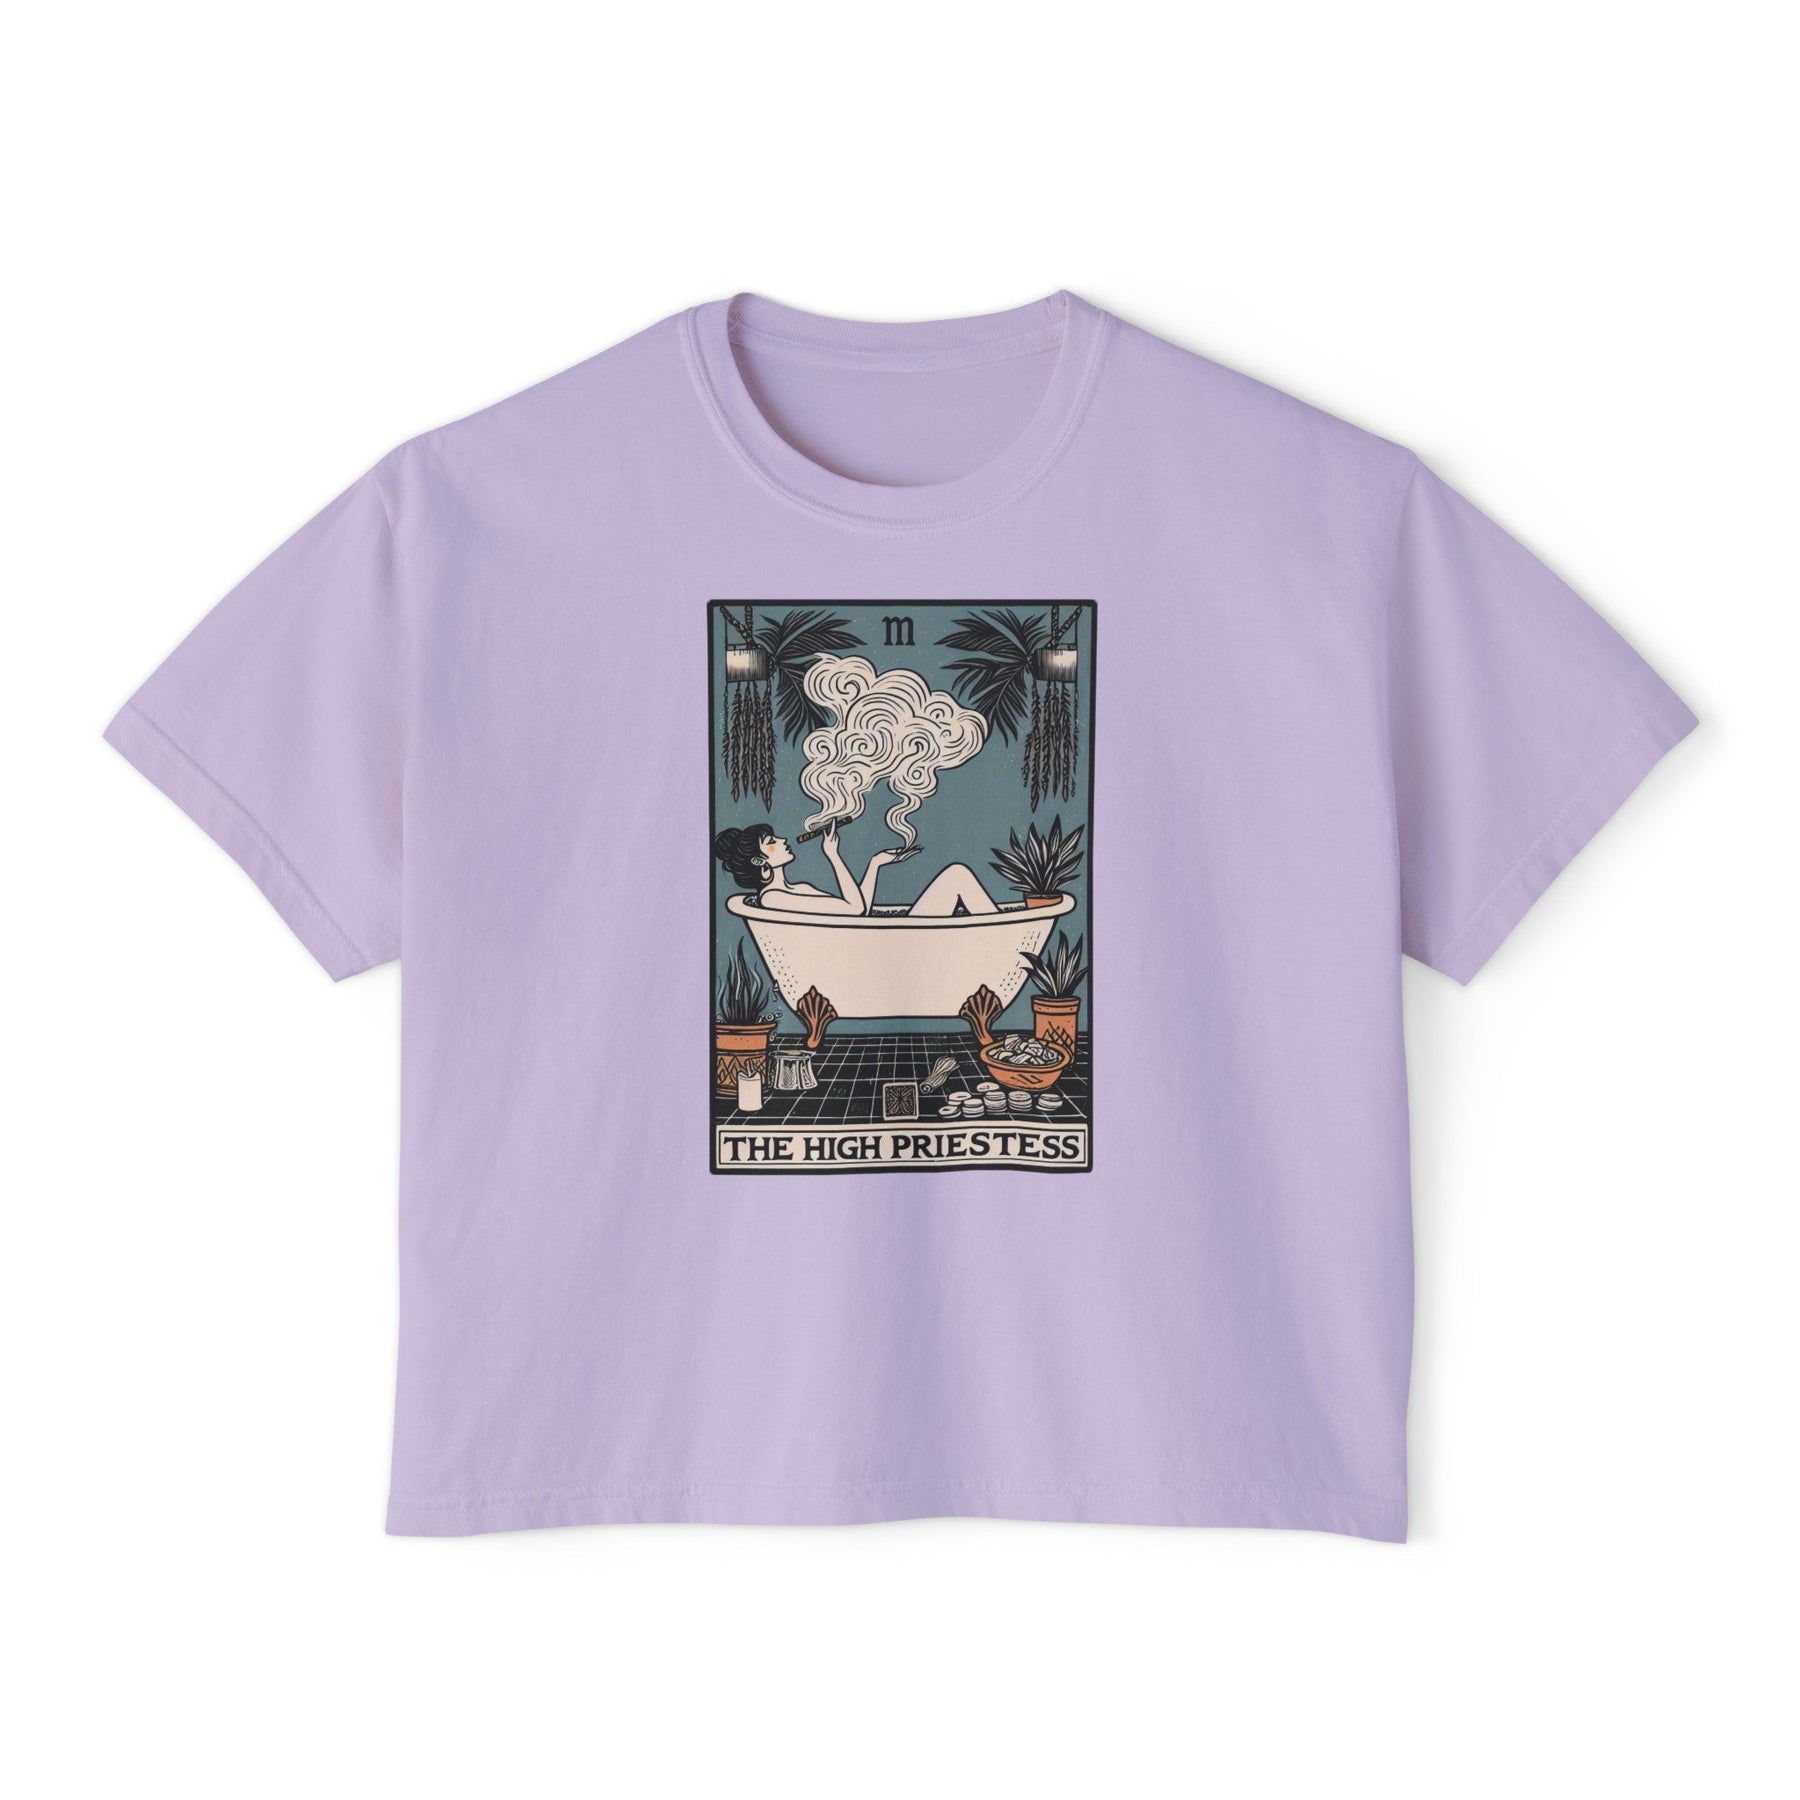 The High Priestess Women's Crop Top Boxy Tee - Goth Cloth Co.T - Shirt16201617893654548799